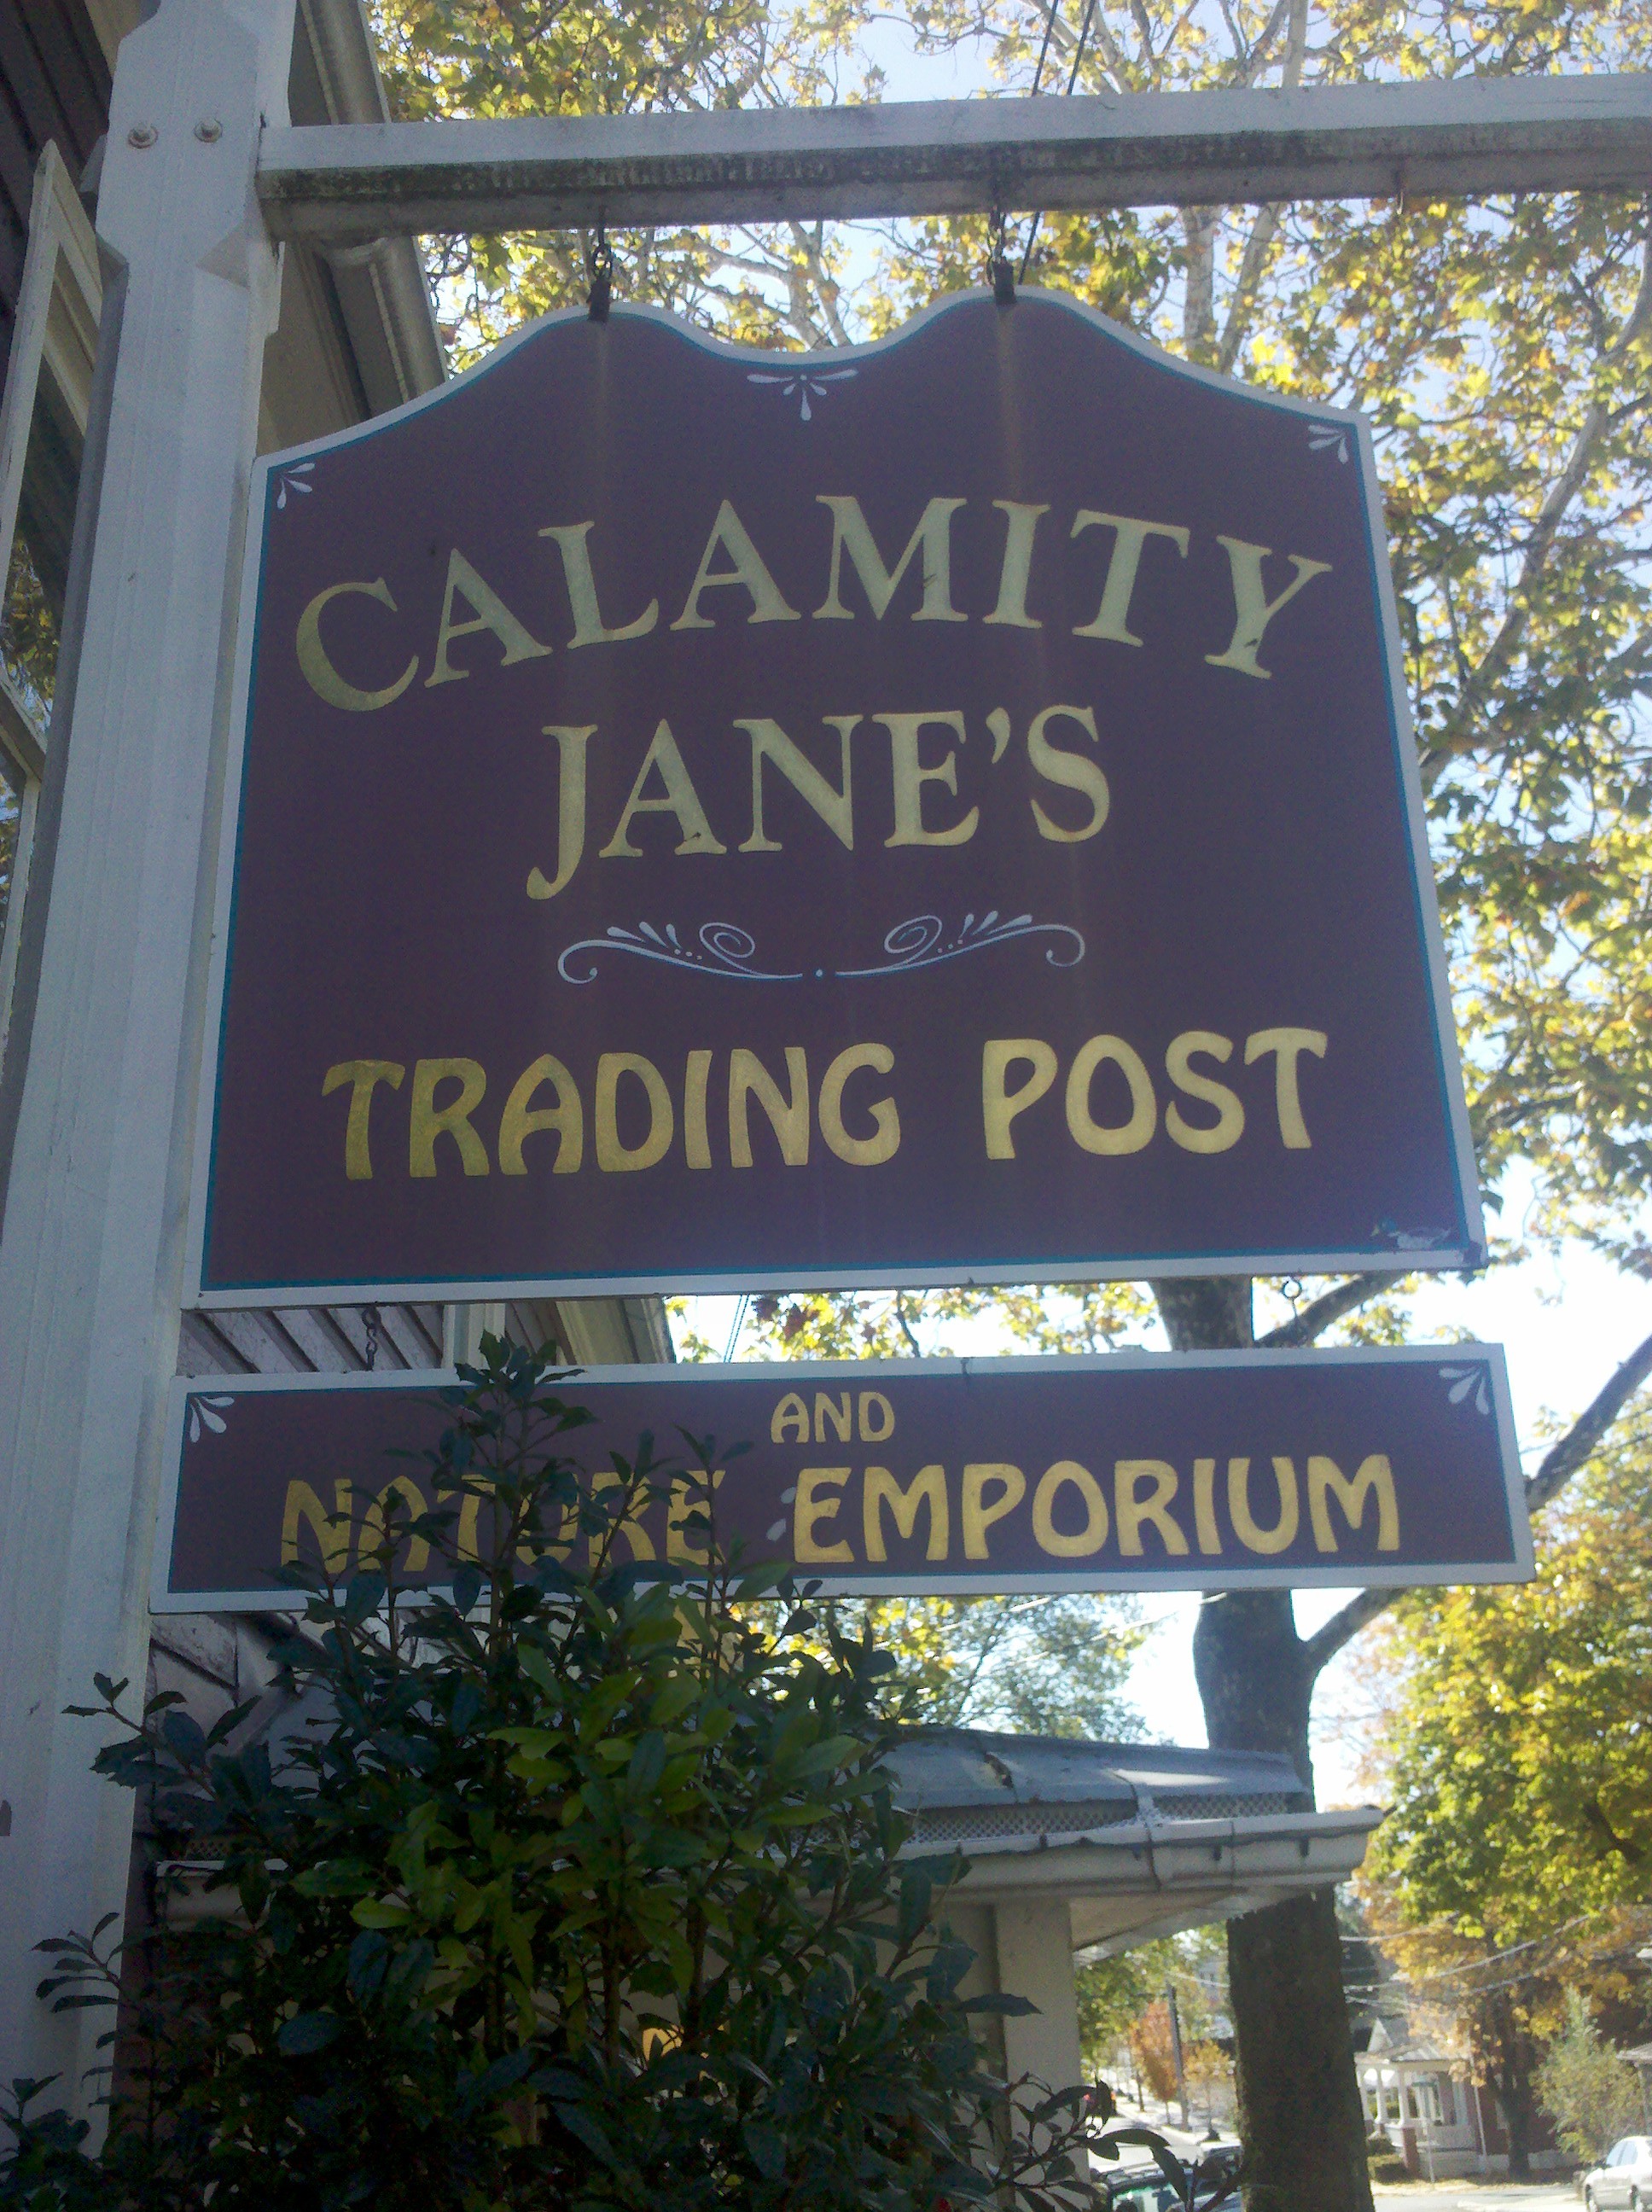 Calamity Jane's Trading Post